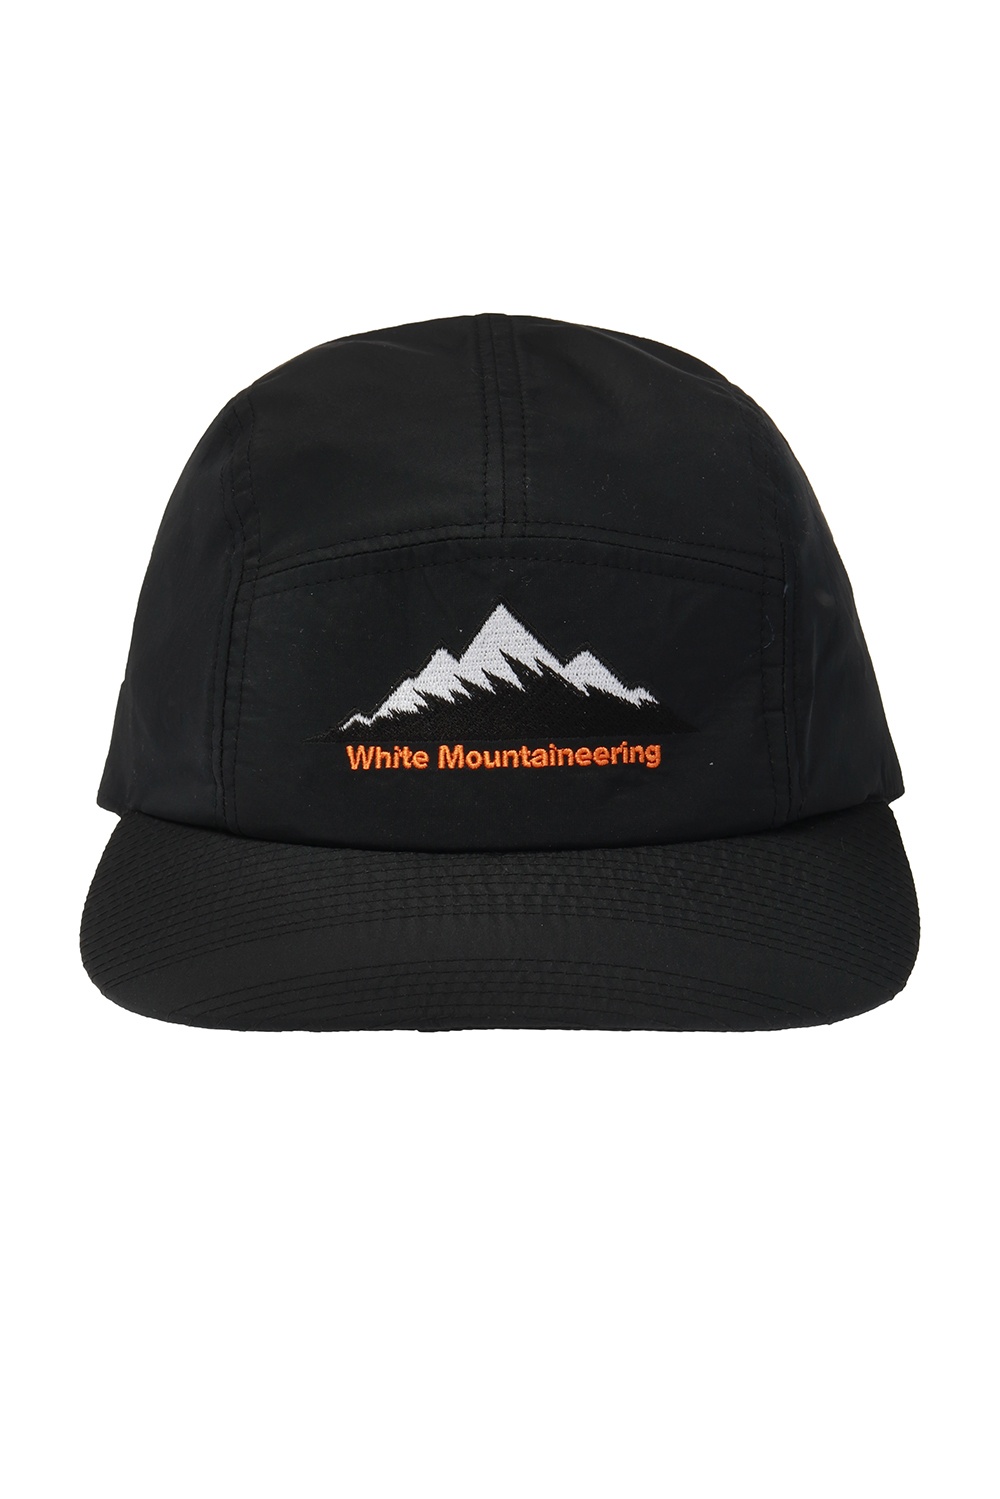 adidas white mountaineering hat